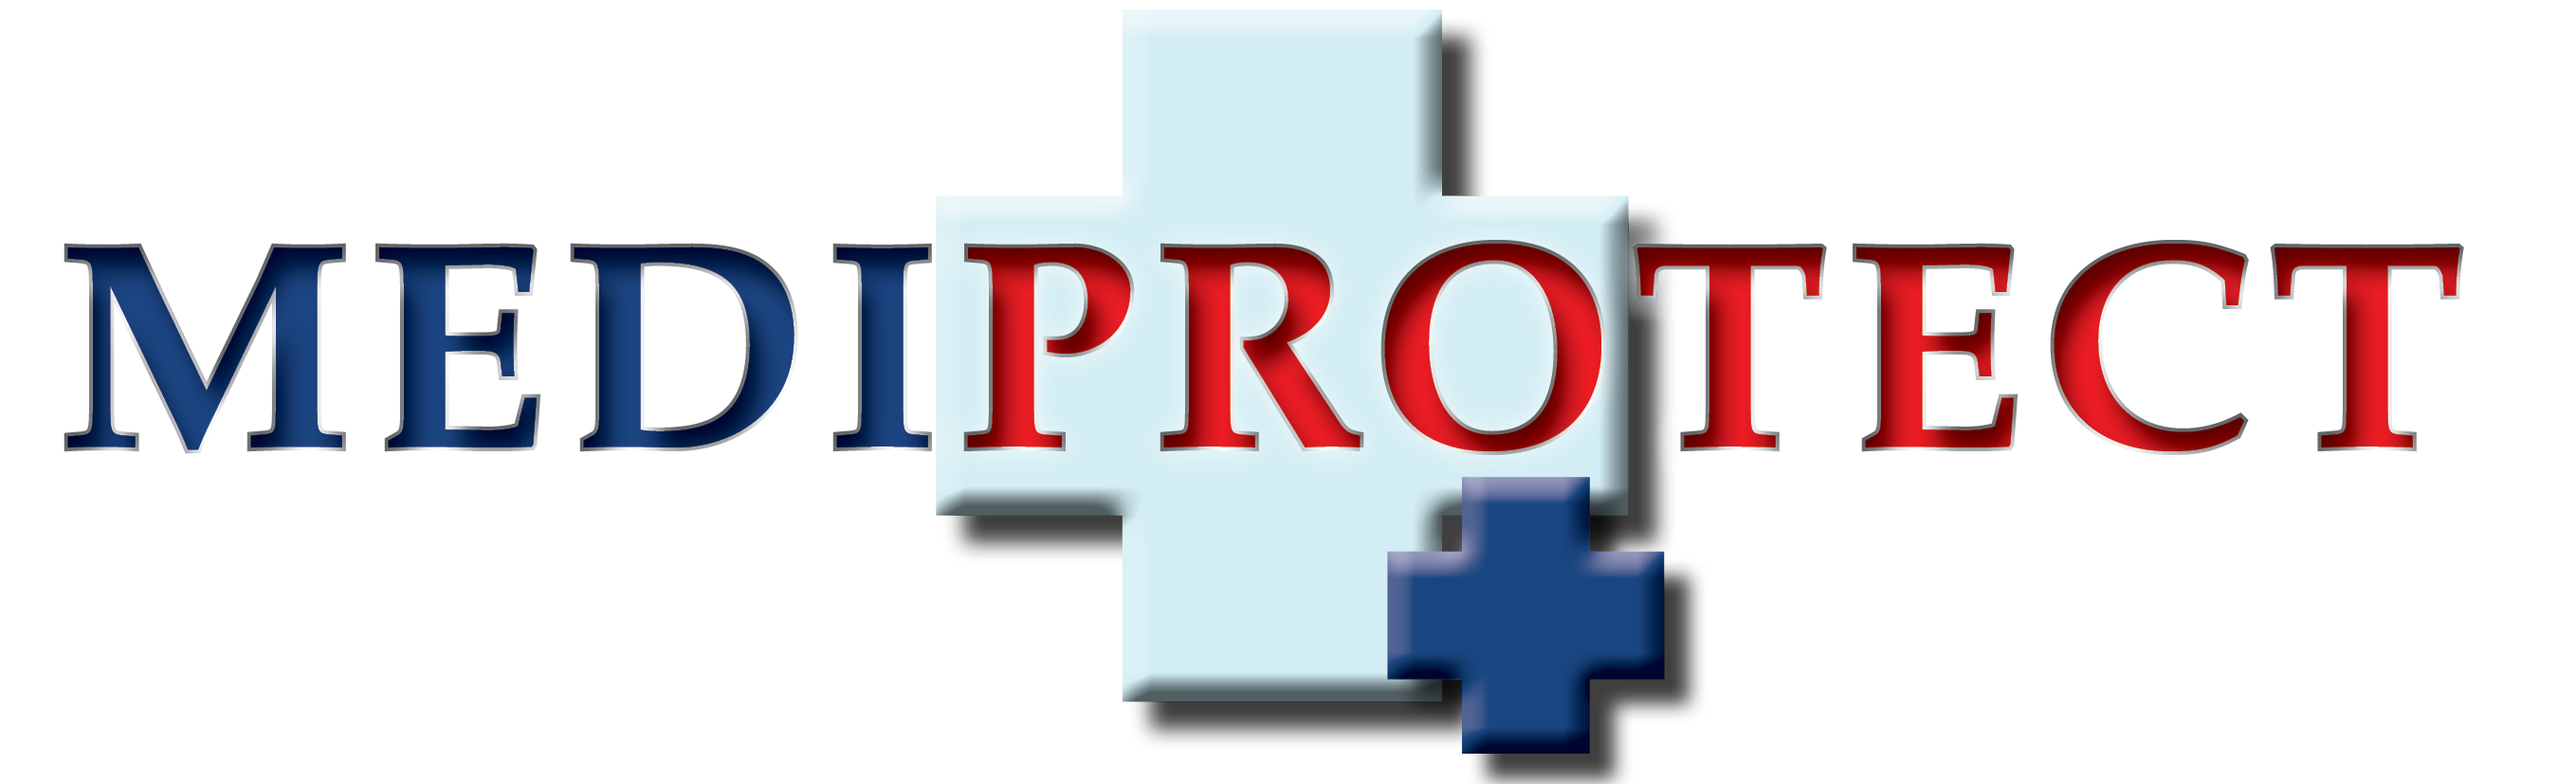 Mediprotect logo